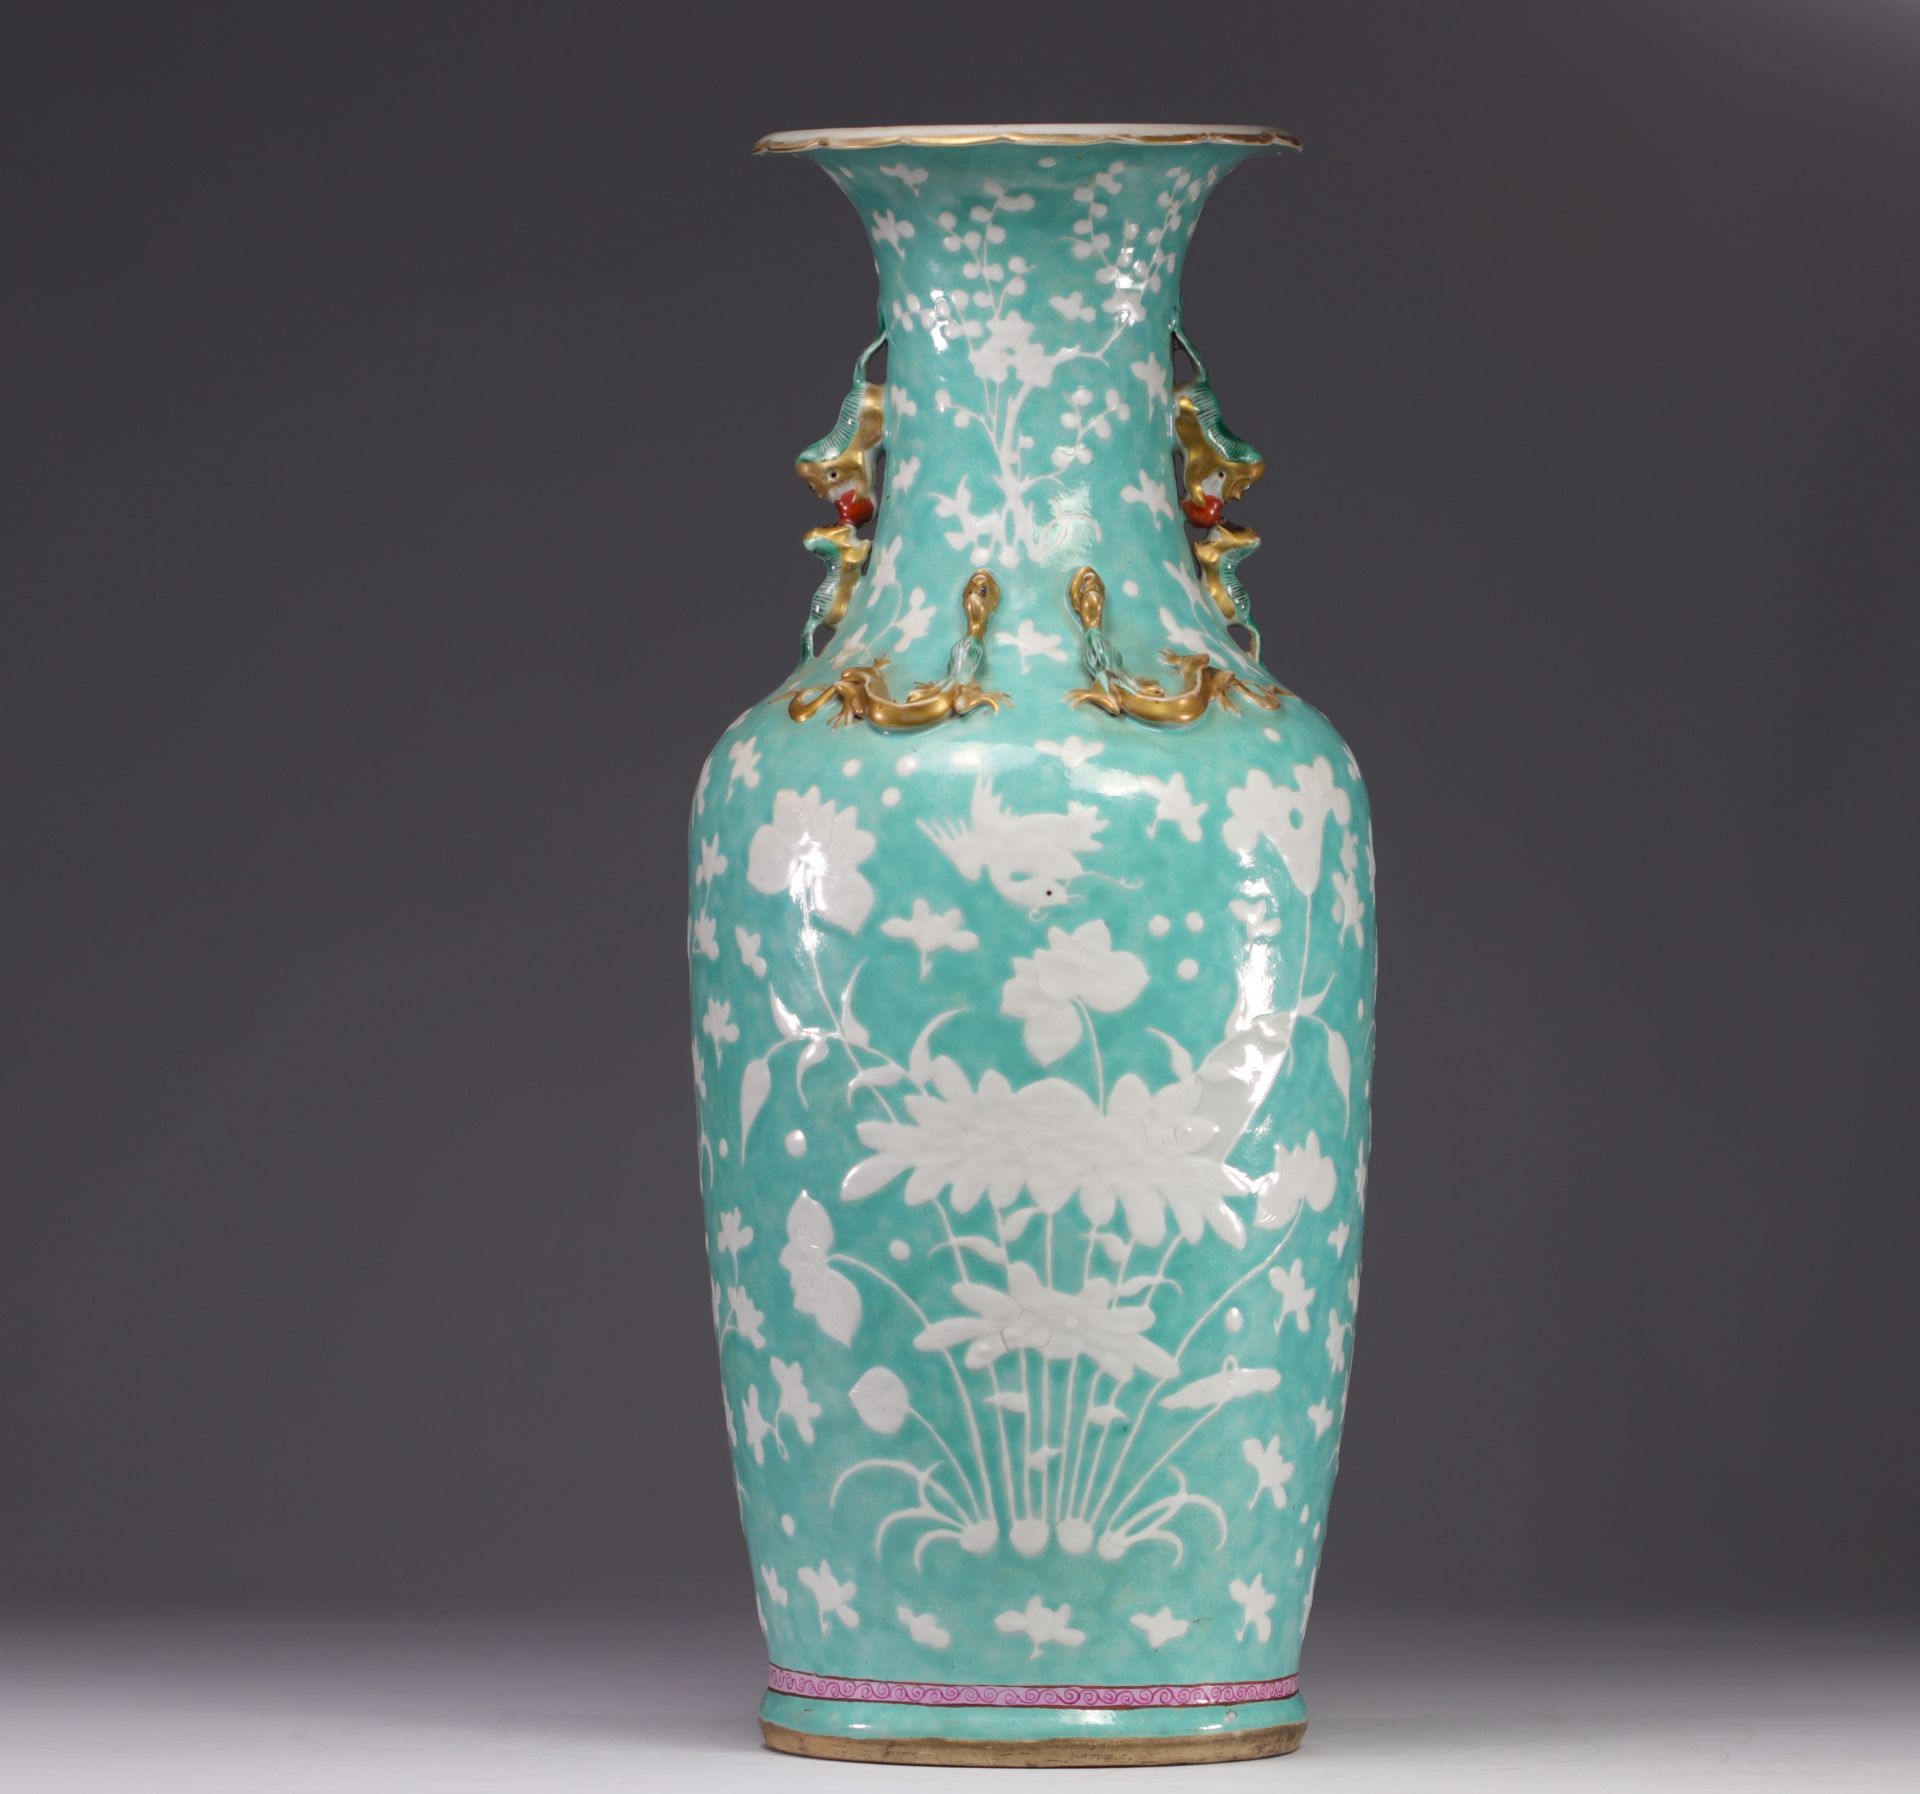 China - large porcelain vase decorated with flowers and birds, turquoise glaze, 19th century.